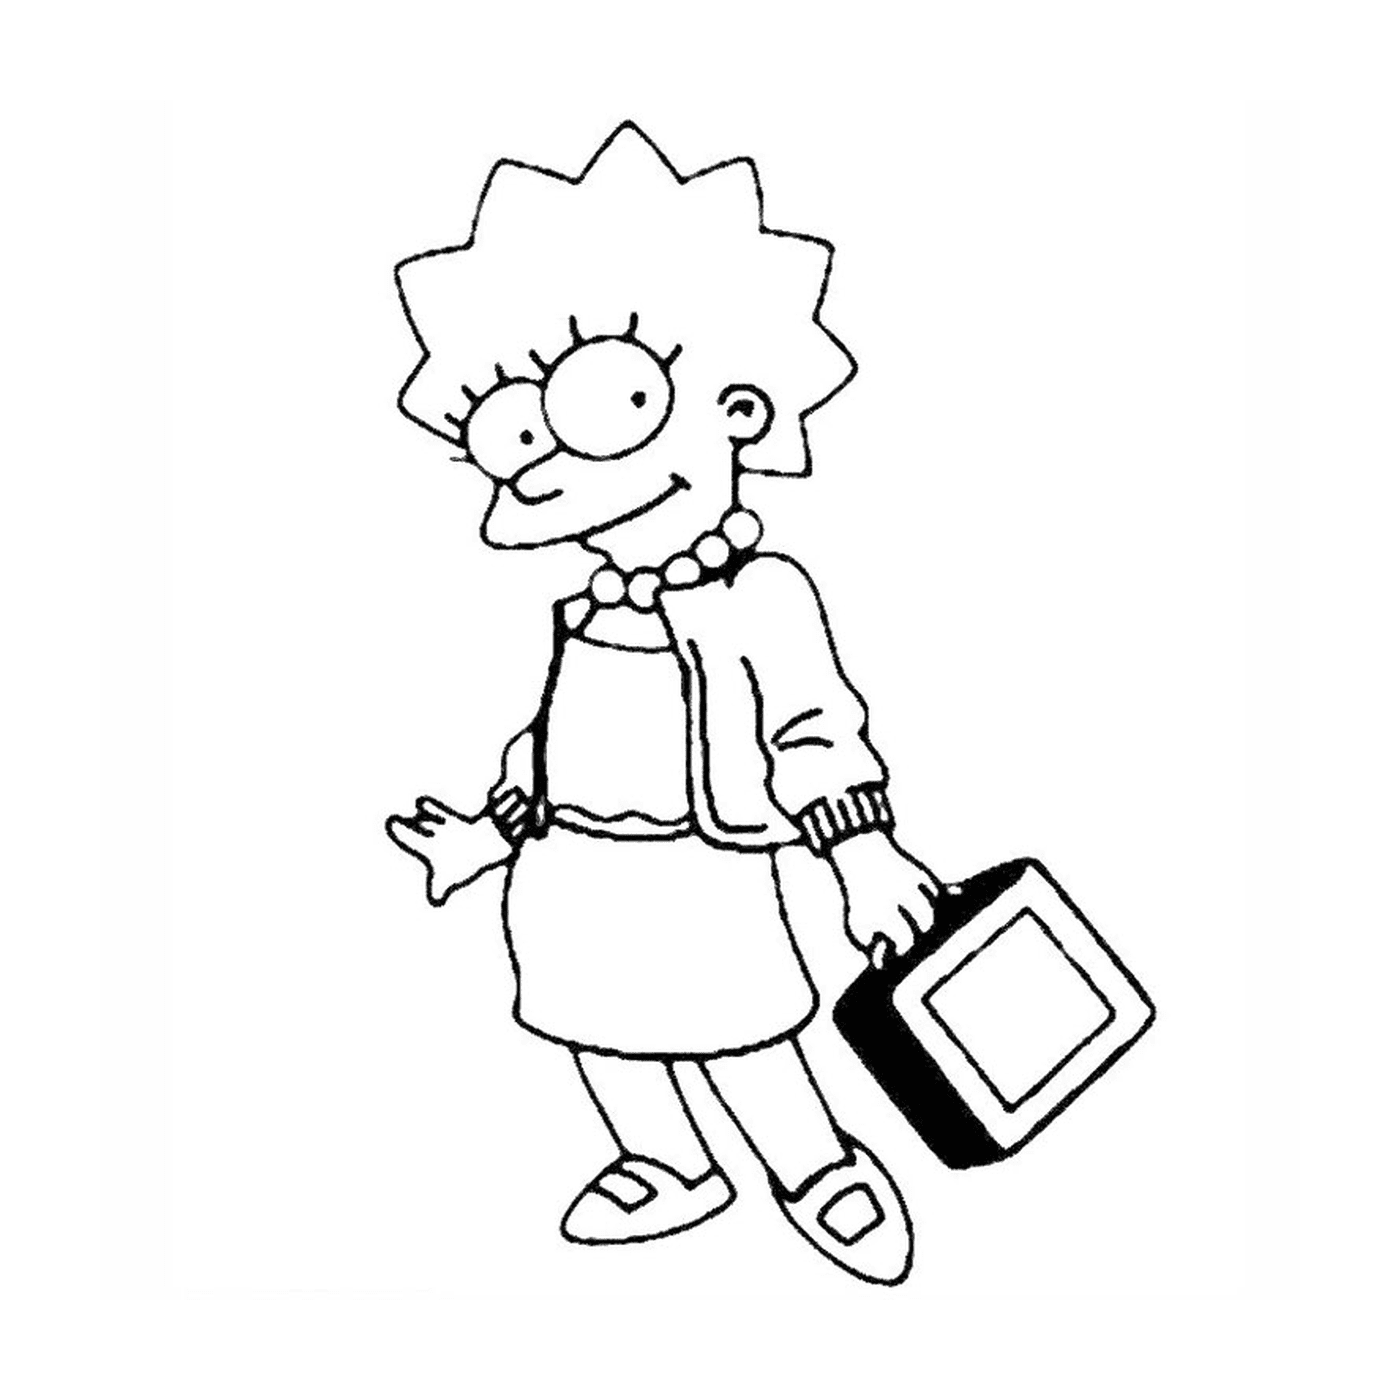  Lisa Simpson com uma mala 